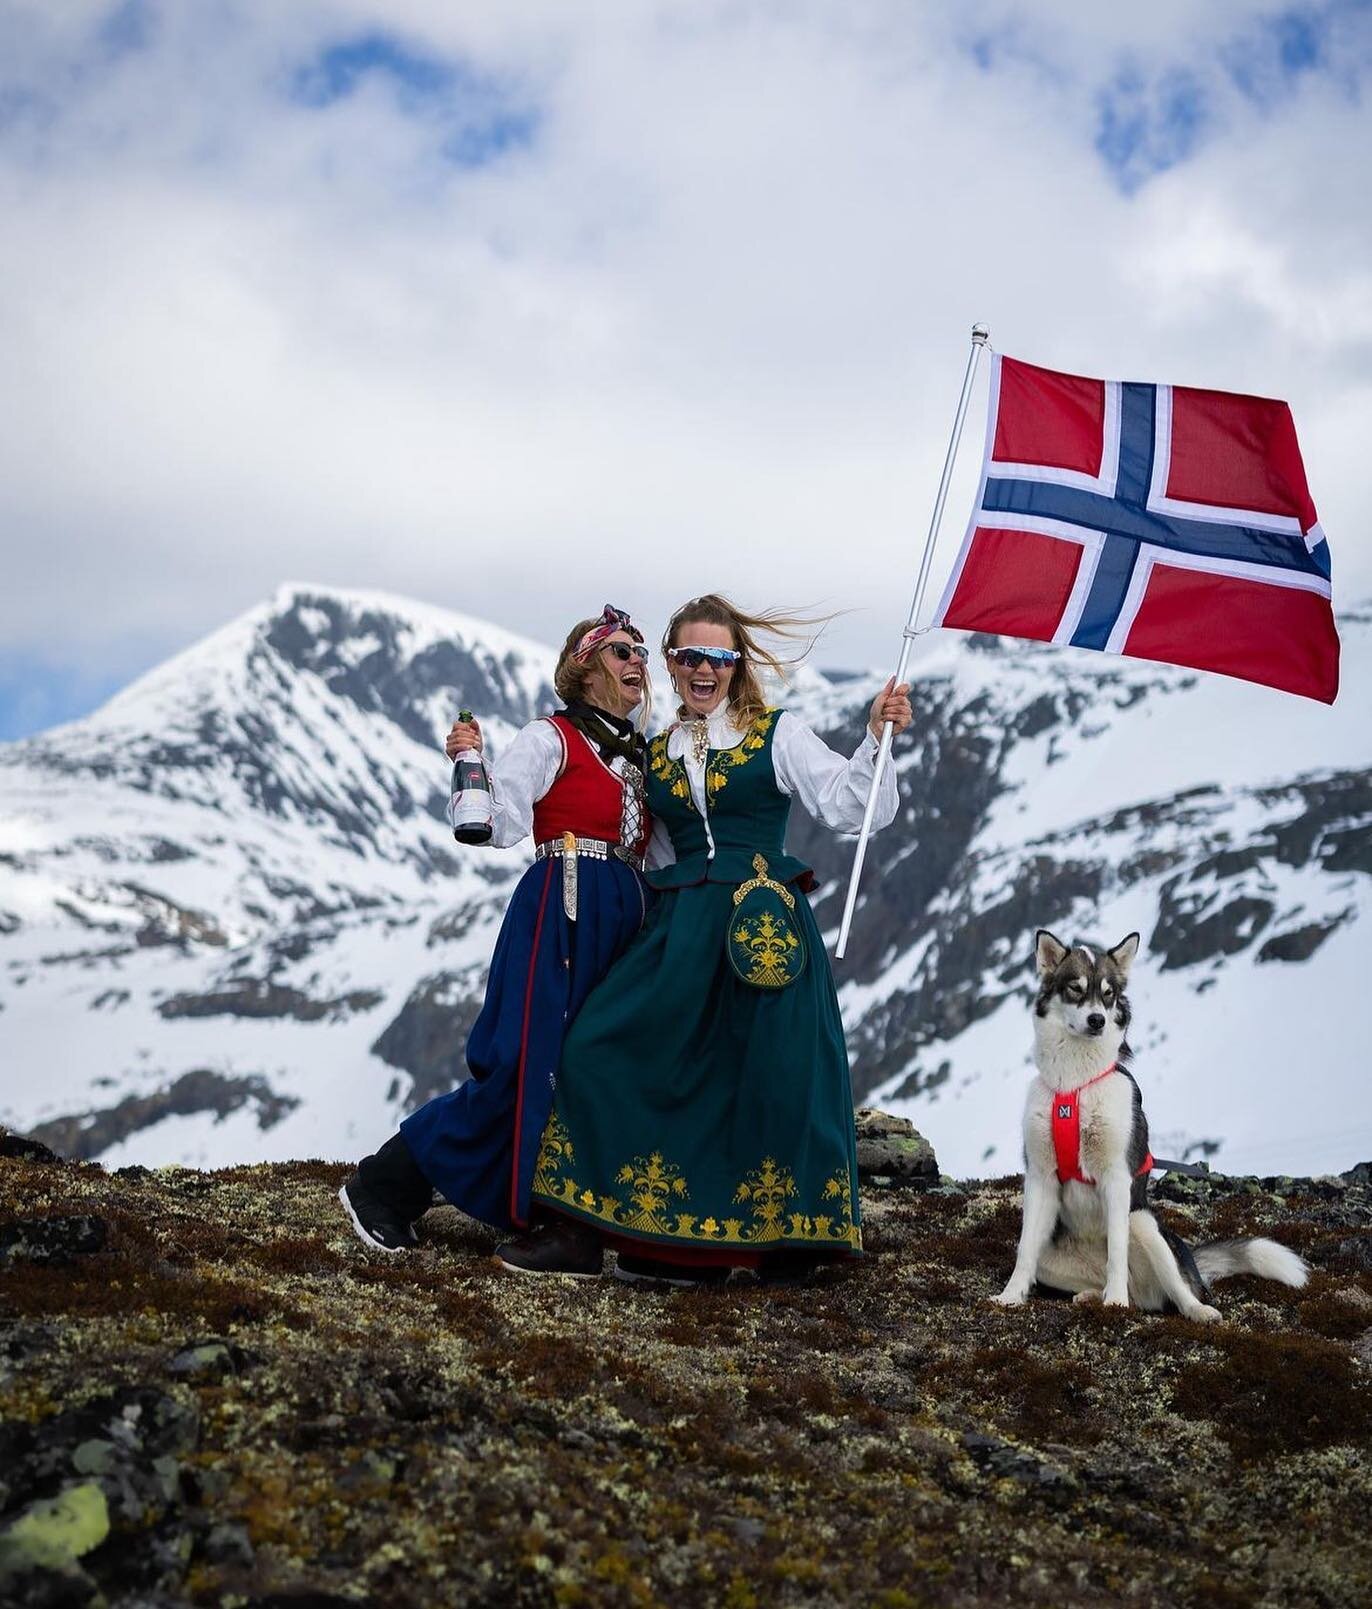 Happy 17th of May Norway! 🇳🇴 @frkasplund @iris_toresdatter_soland #grlshred